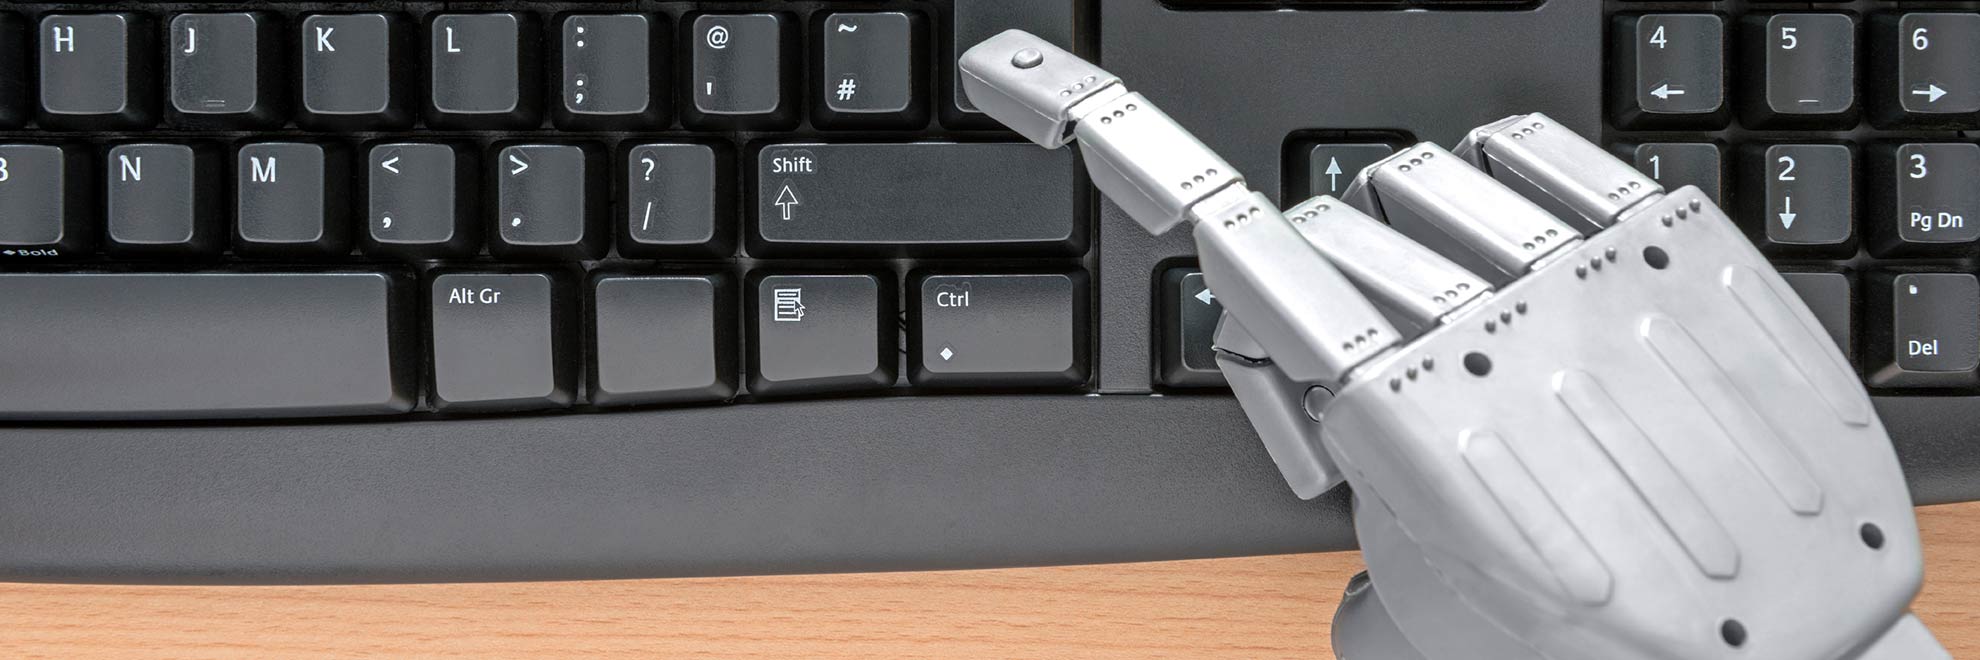 robot hand using keyboard